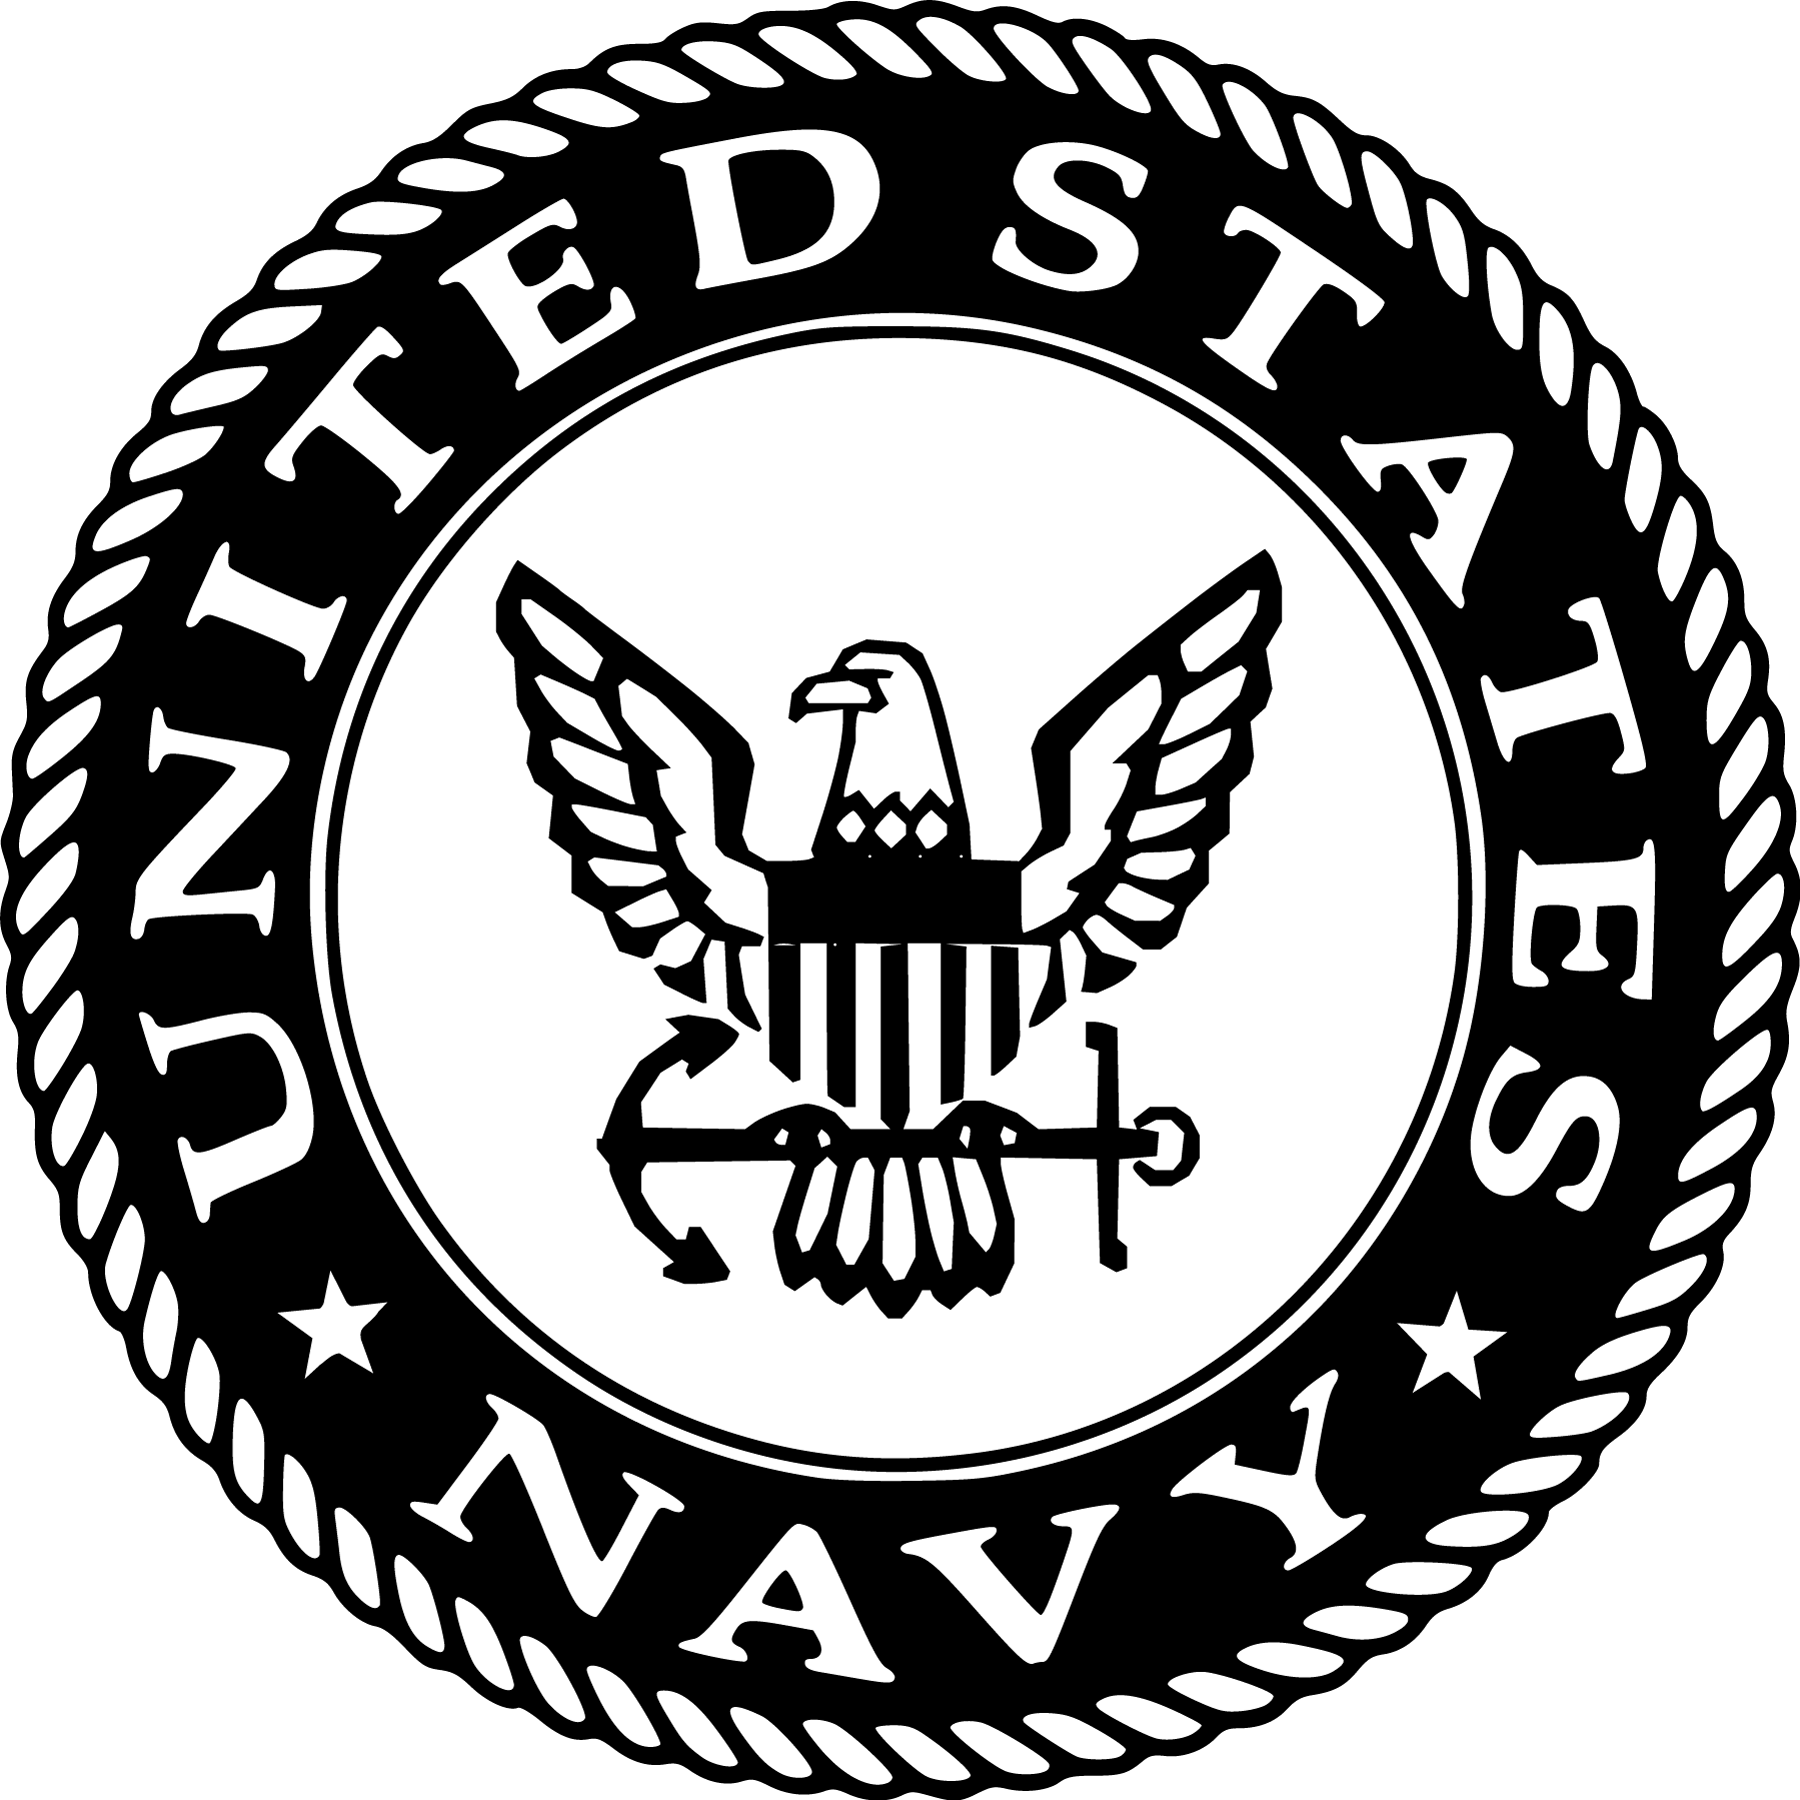 navy military clip art